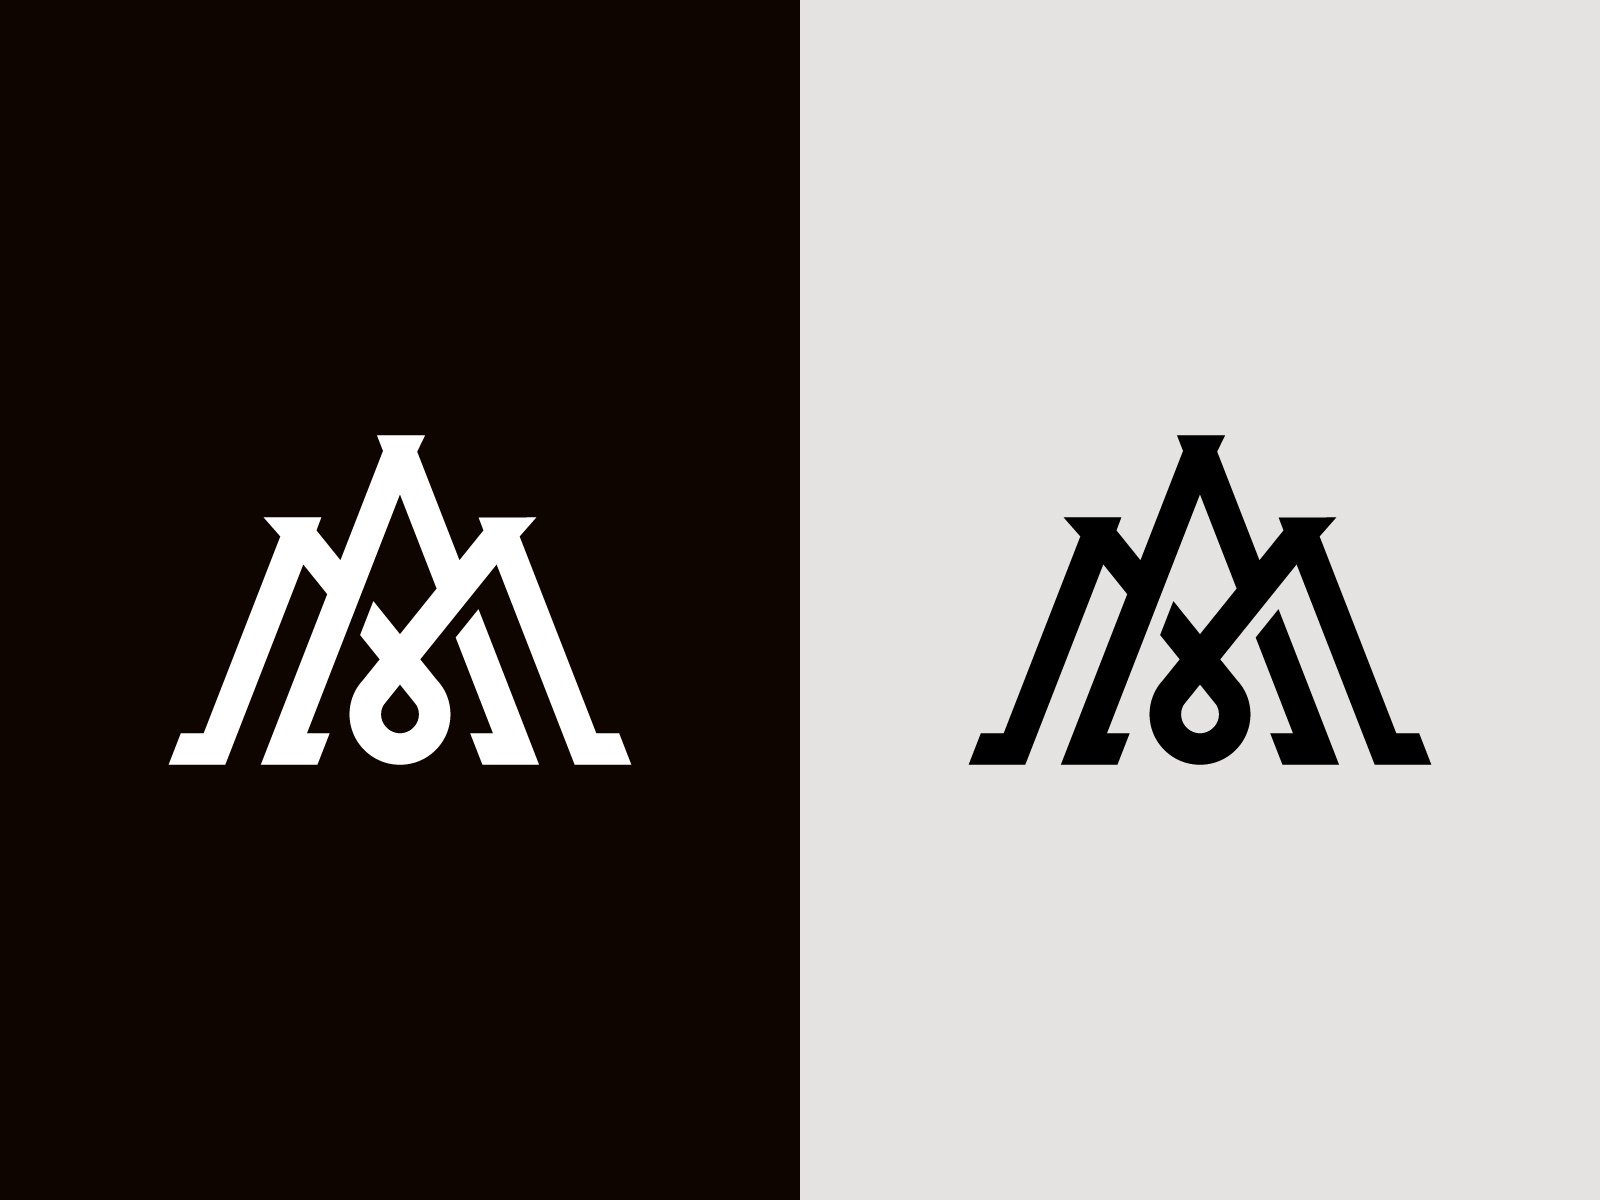 Letter MA Logo / AM Logo by Sabuj Ali on Dribbble